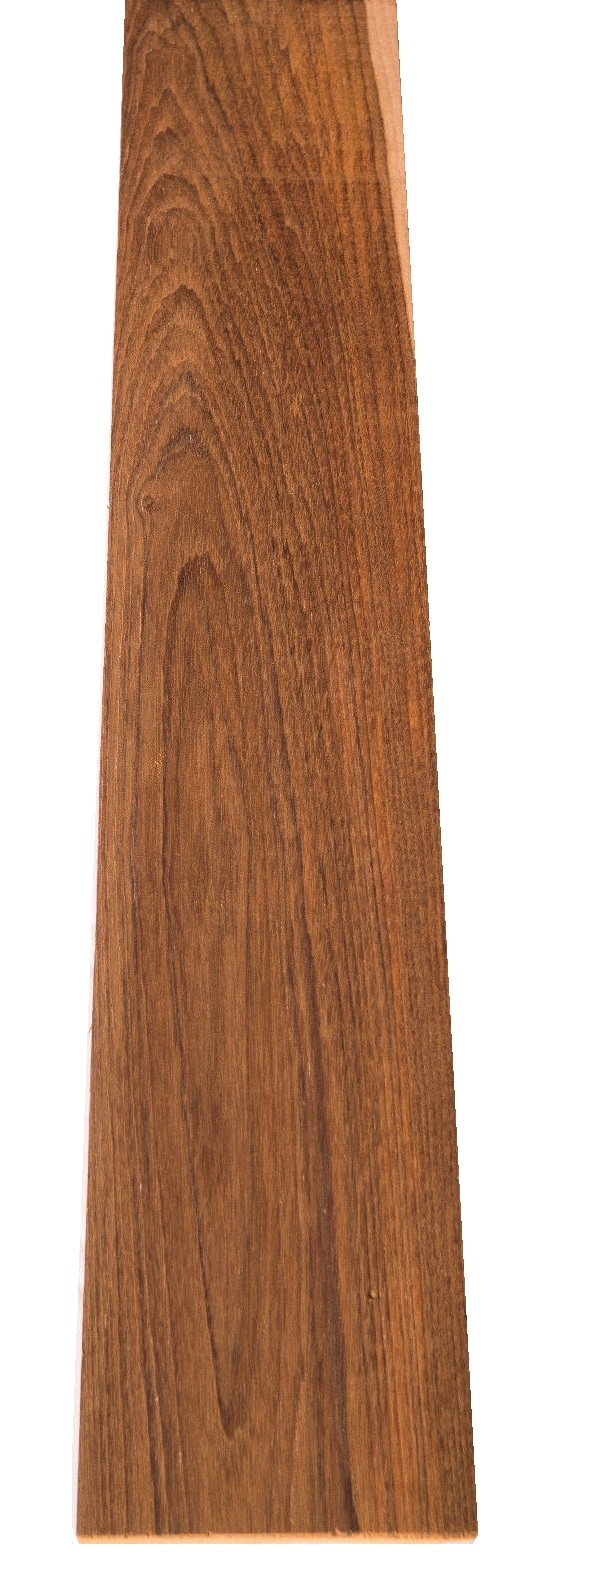 vecchio legno di teak btc